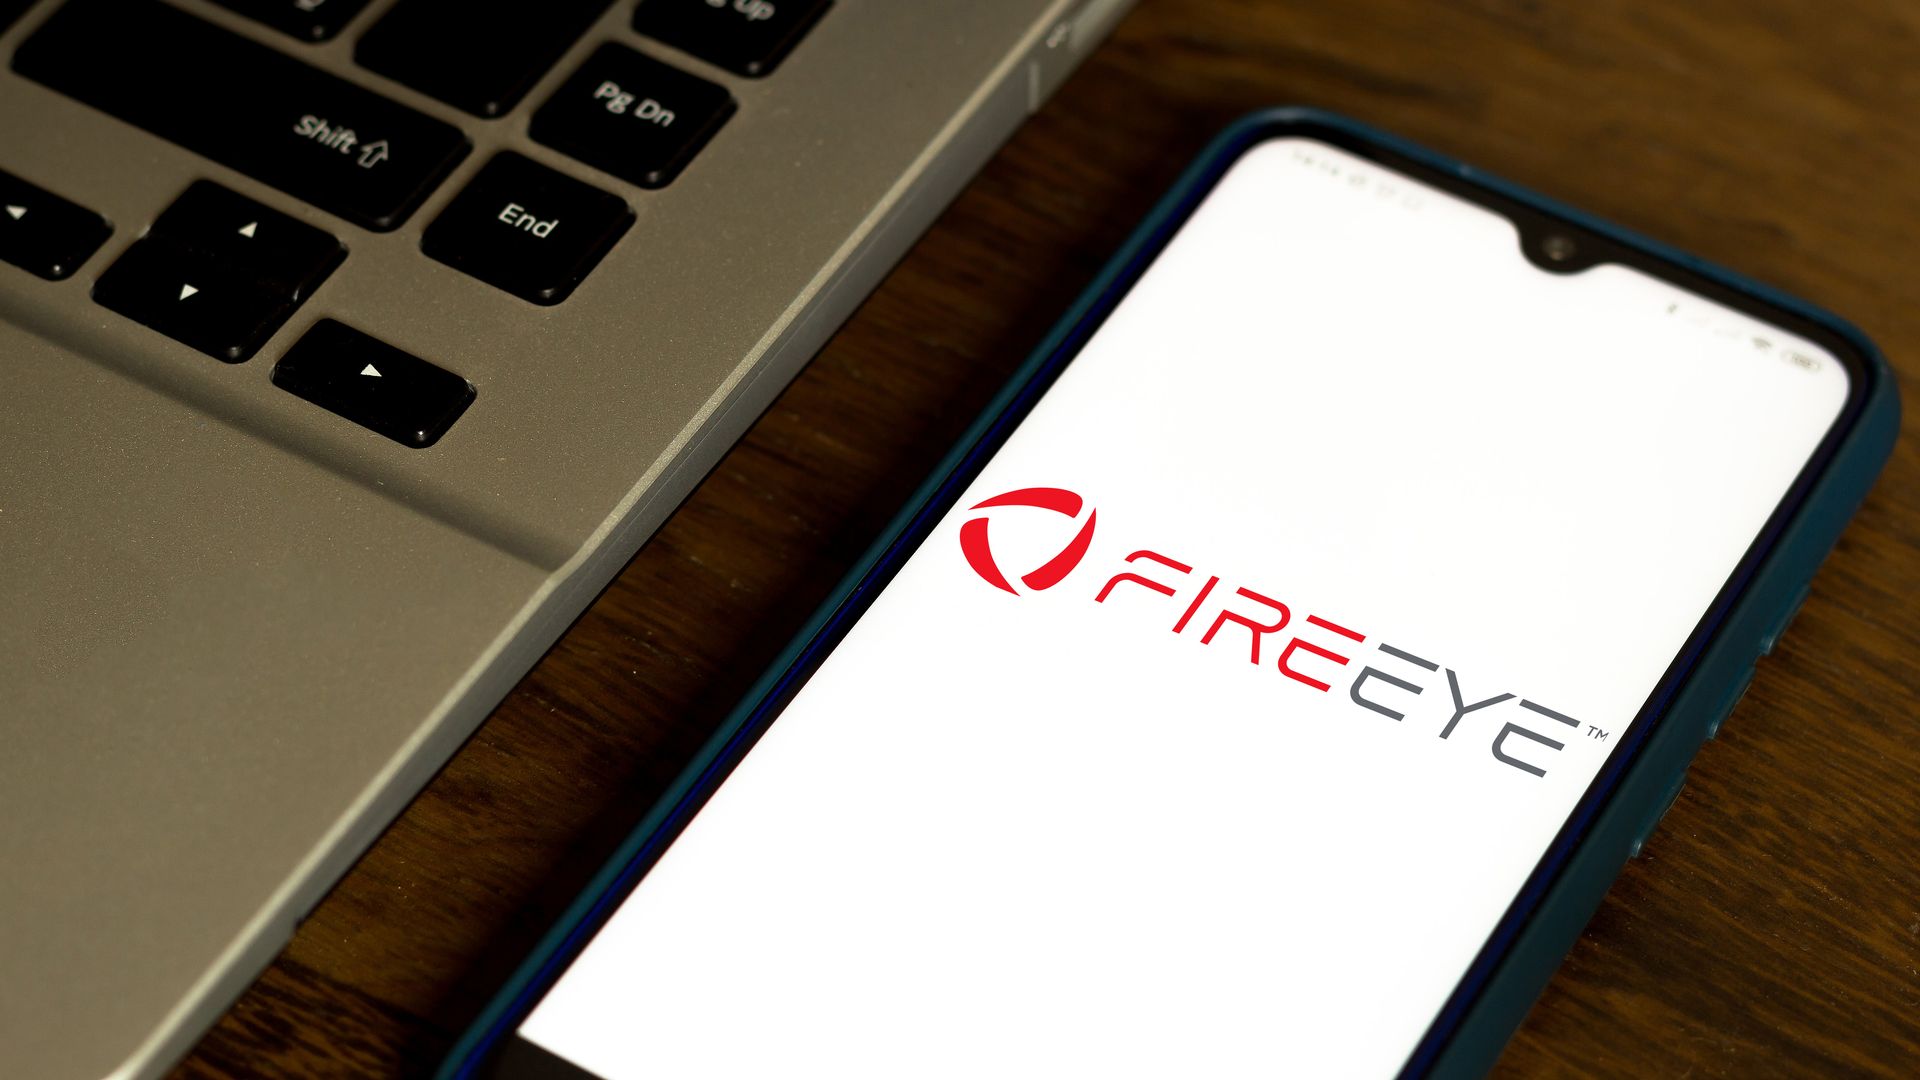 The FireEye logo on a cellphone screen.